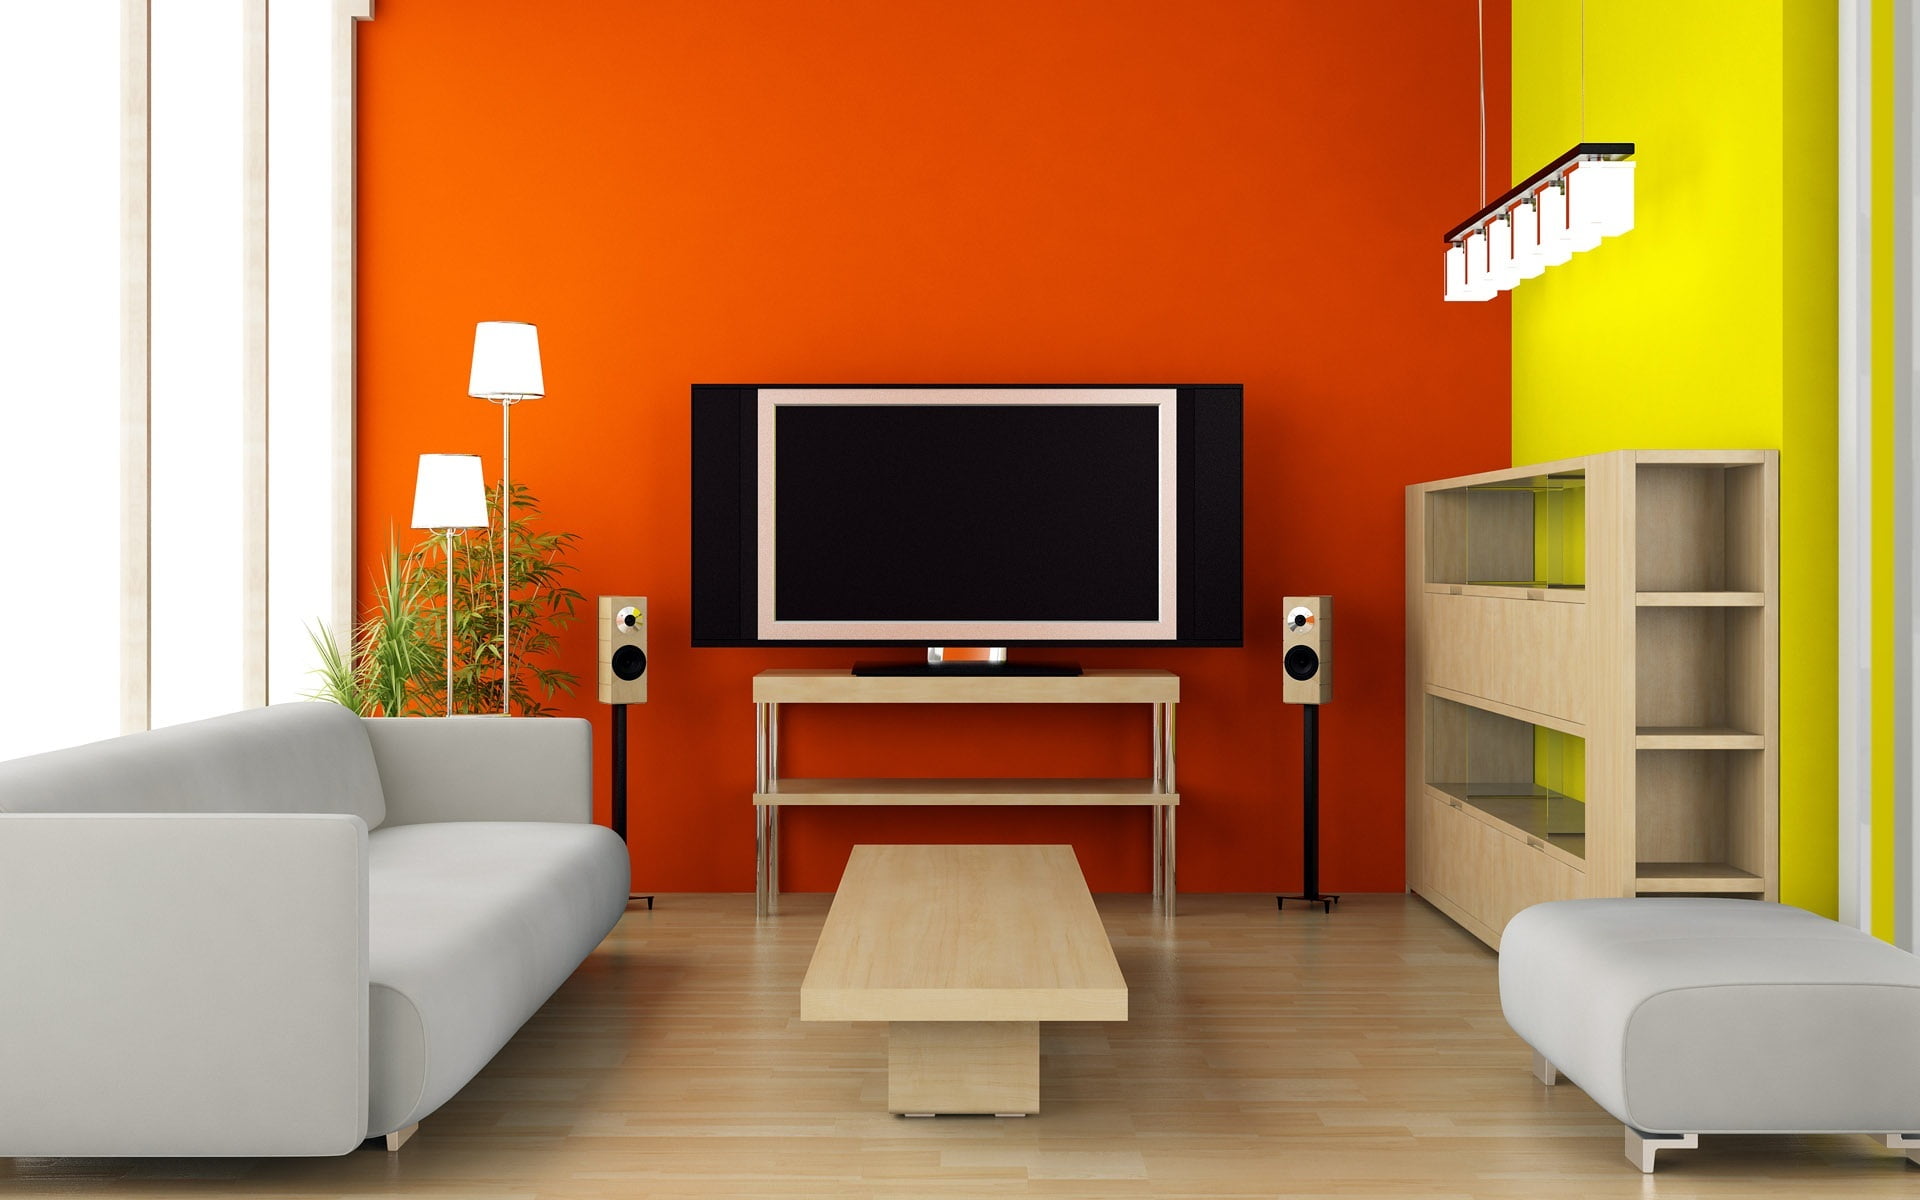 gray flat screen TV, style, room, interior, minimalism, domestic Room